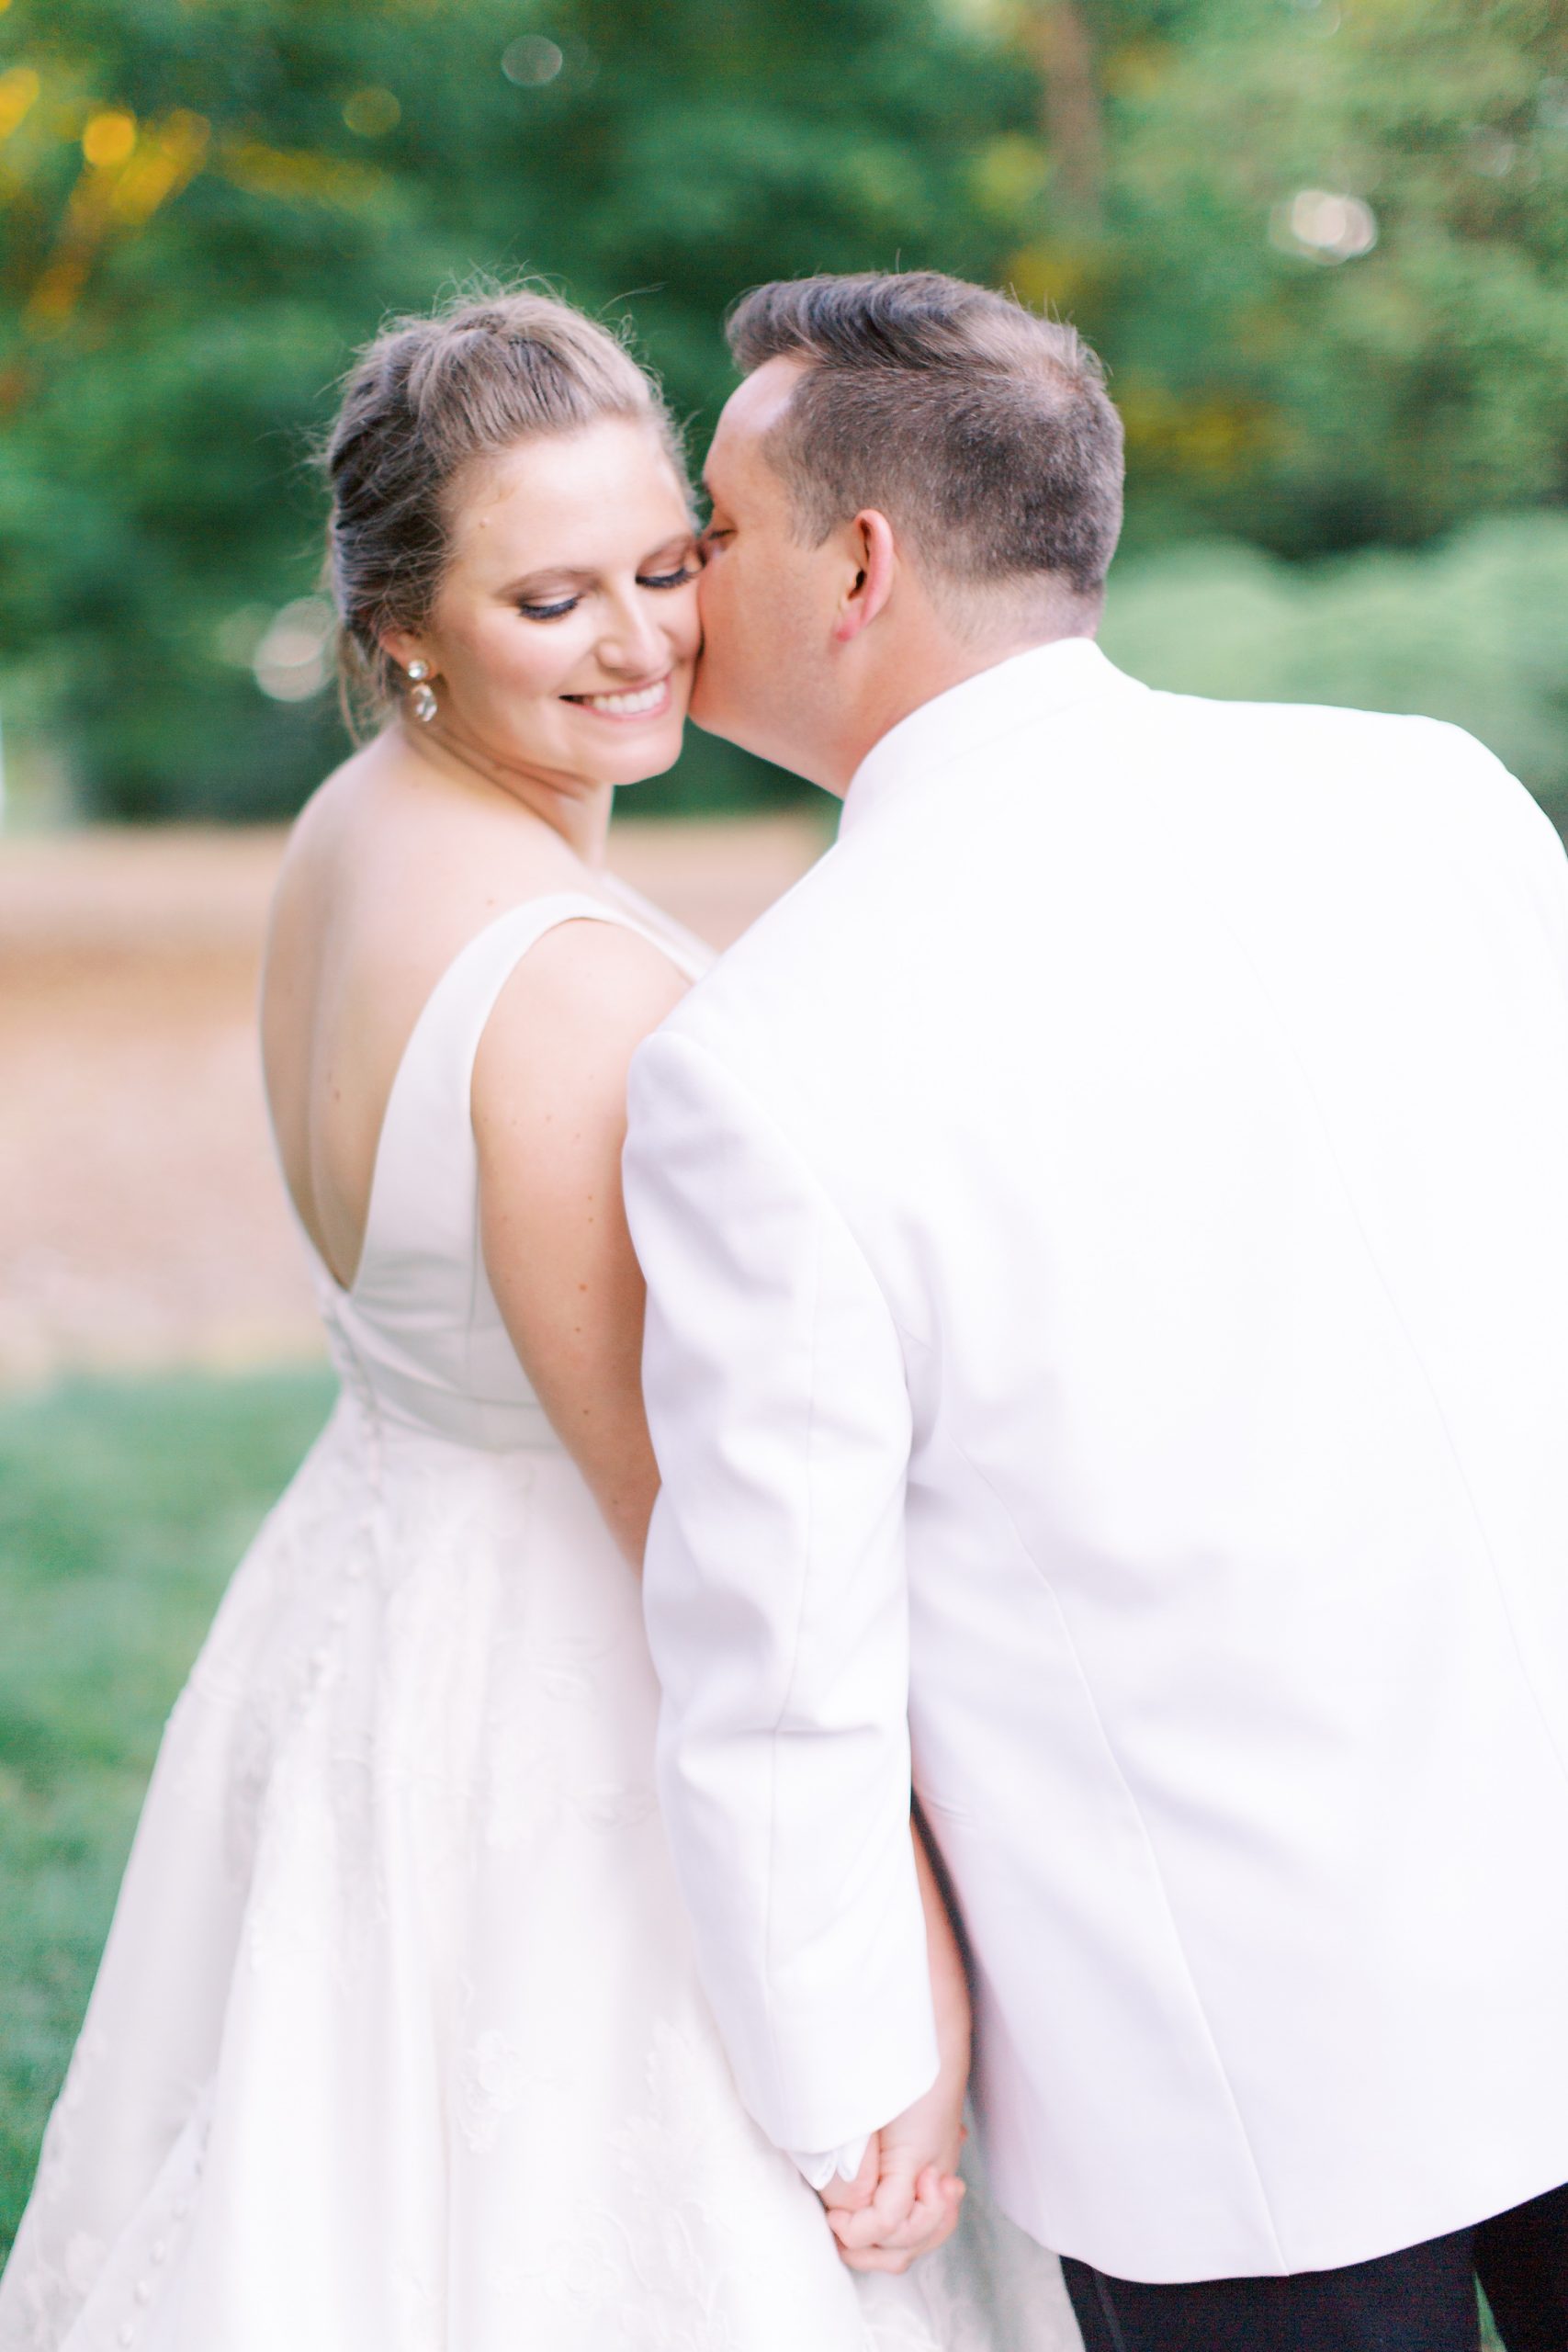 groom kisses bride's cheek during wedding portraits